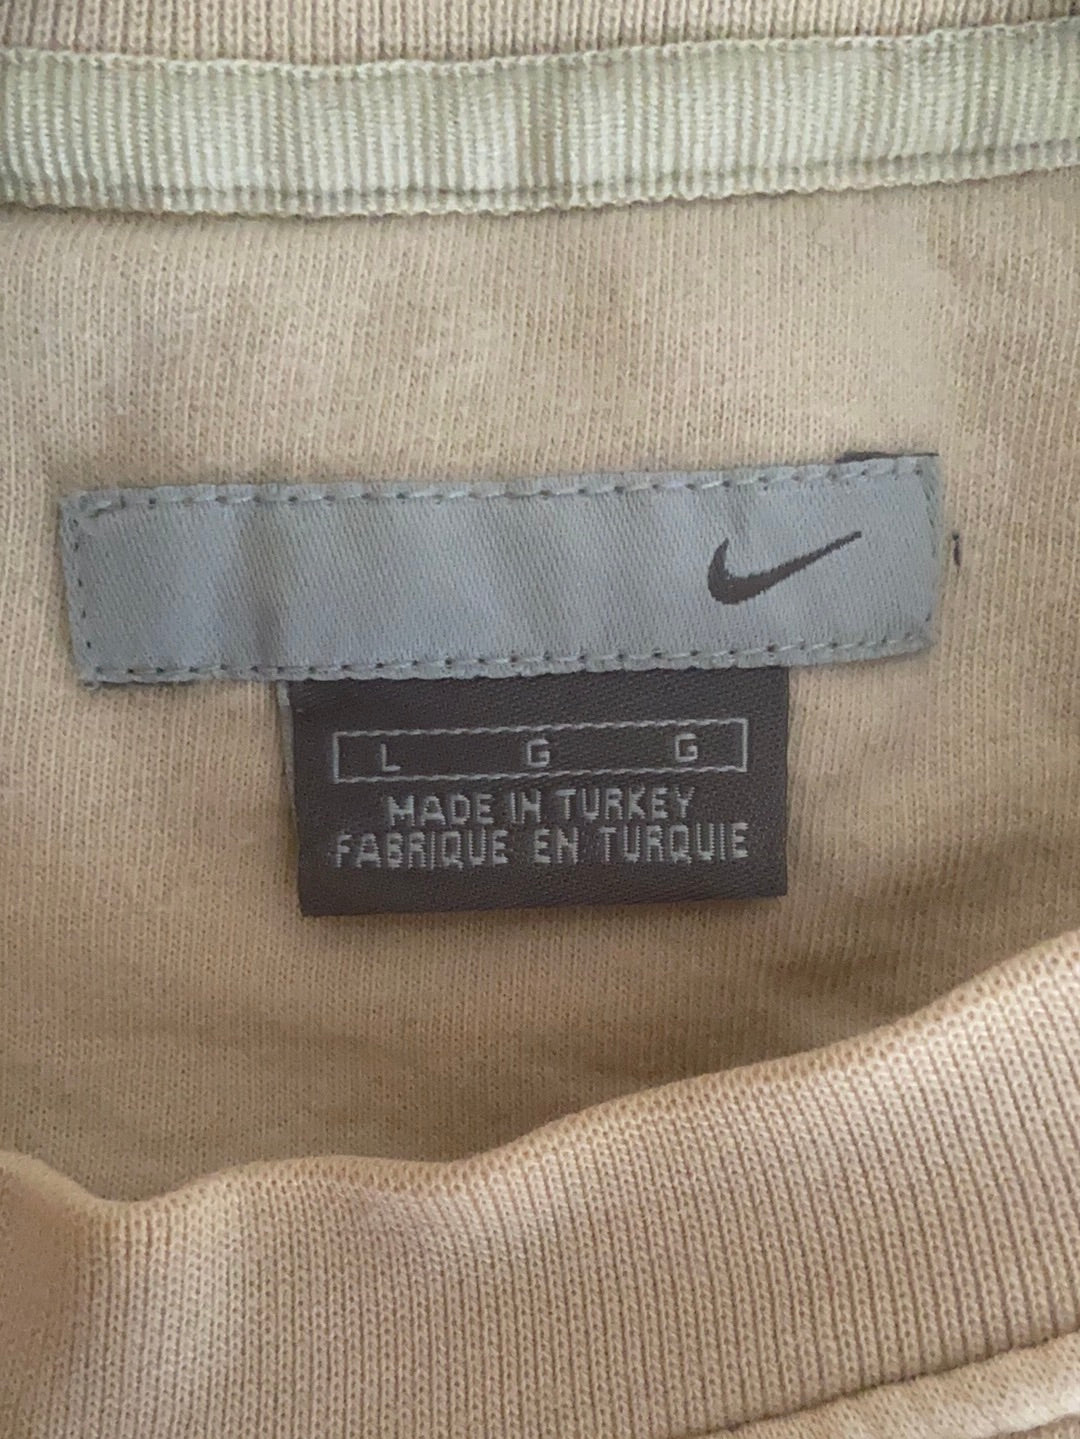 Nike Sweatshirt - Large